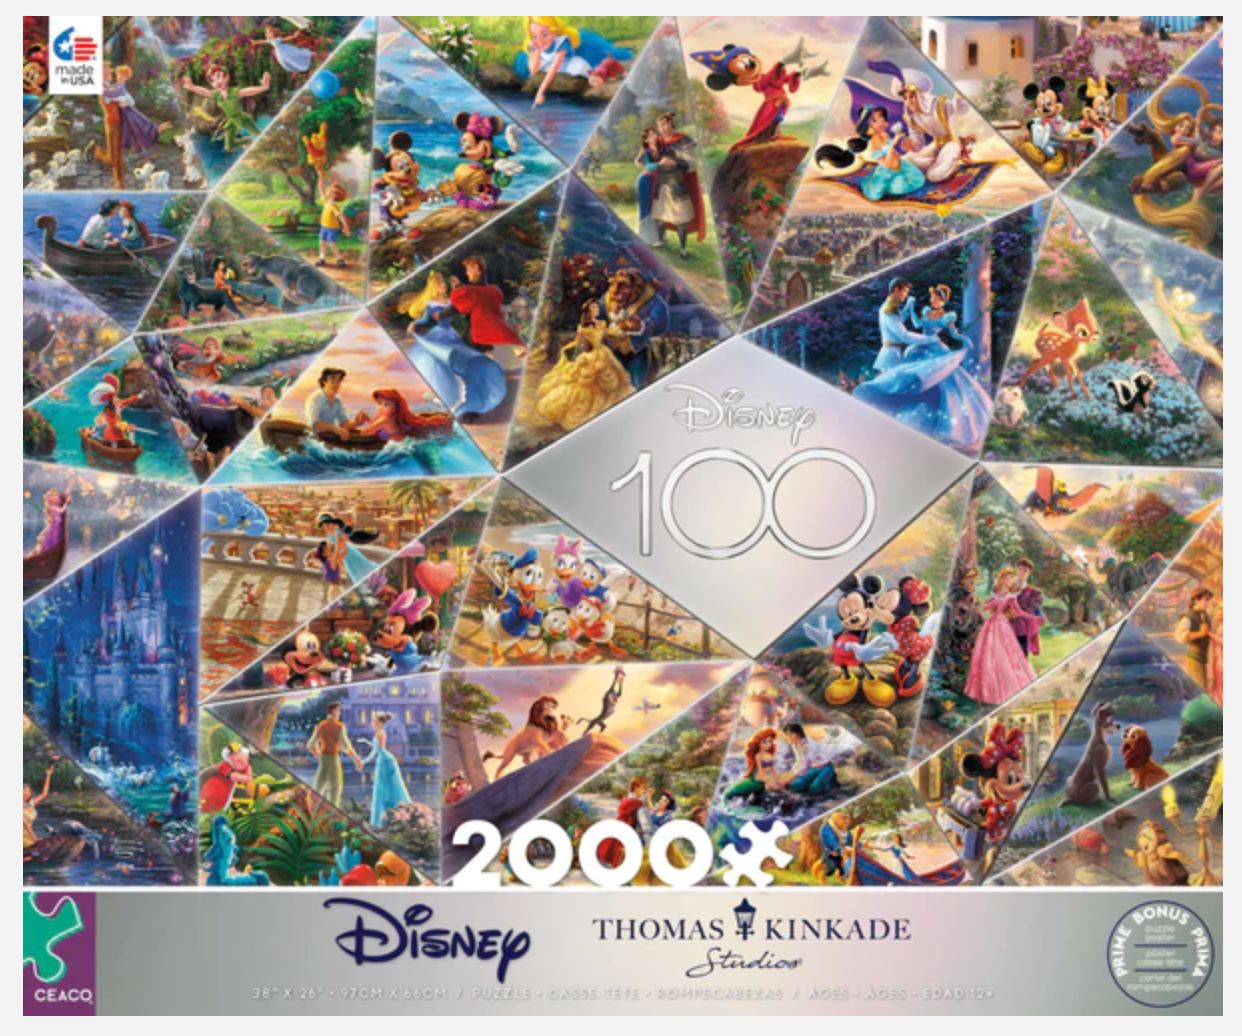 Ceaco Thomas Kinkade Disney 100 - Collage - 2000 Piece Puzzle New with Box